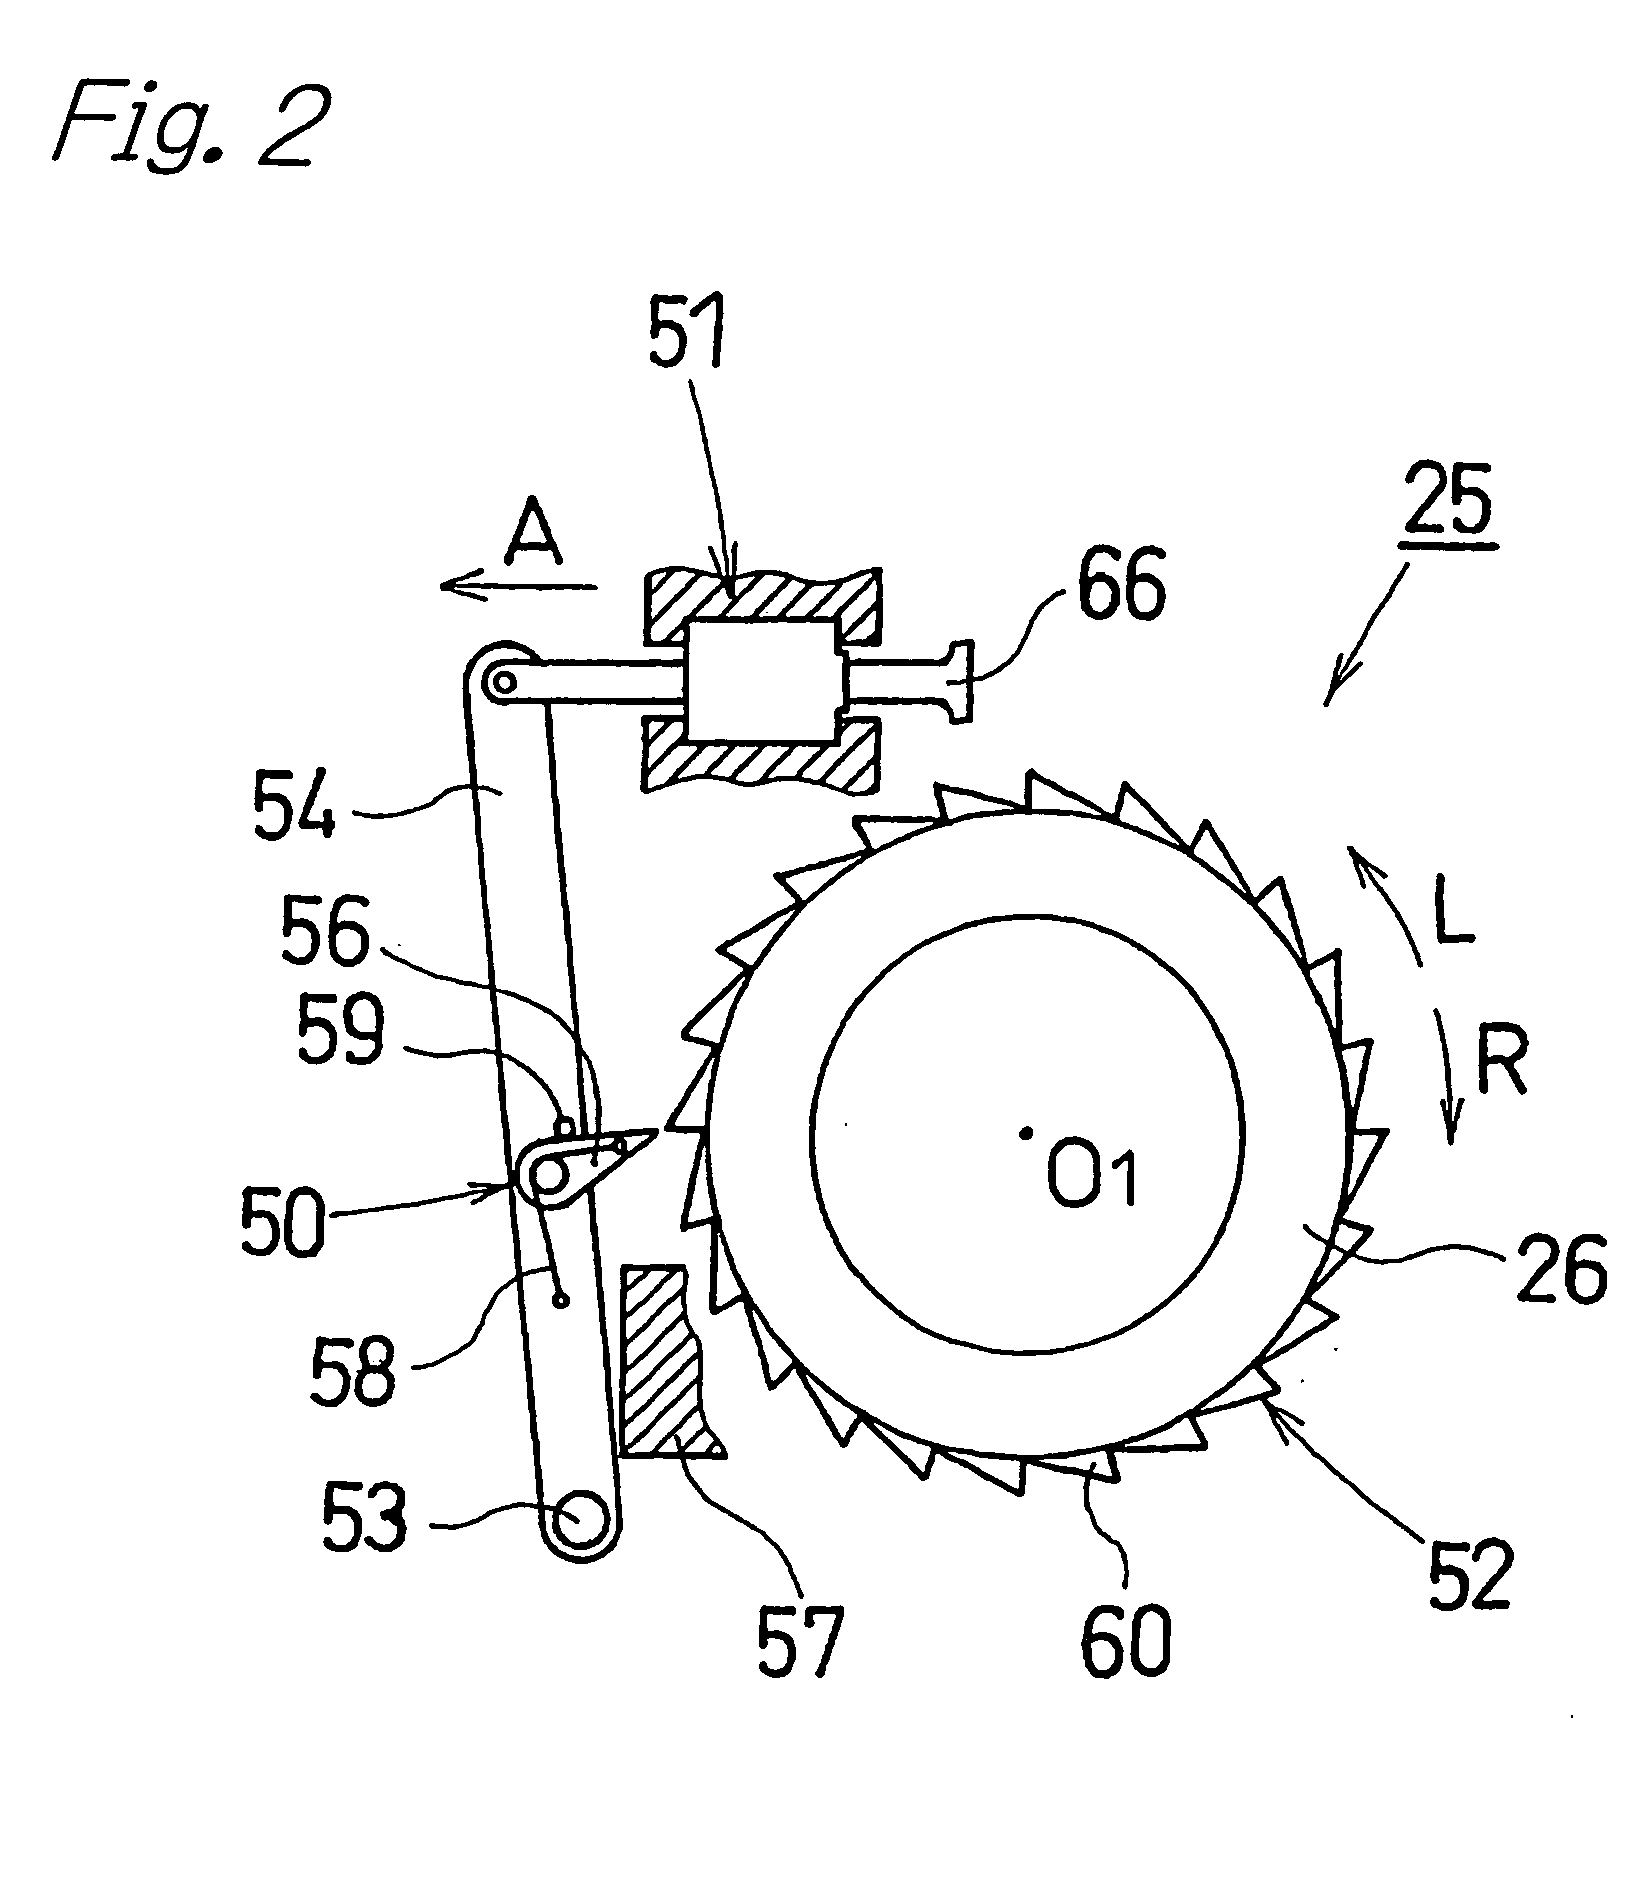 Motor-driven disk brake system